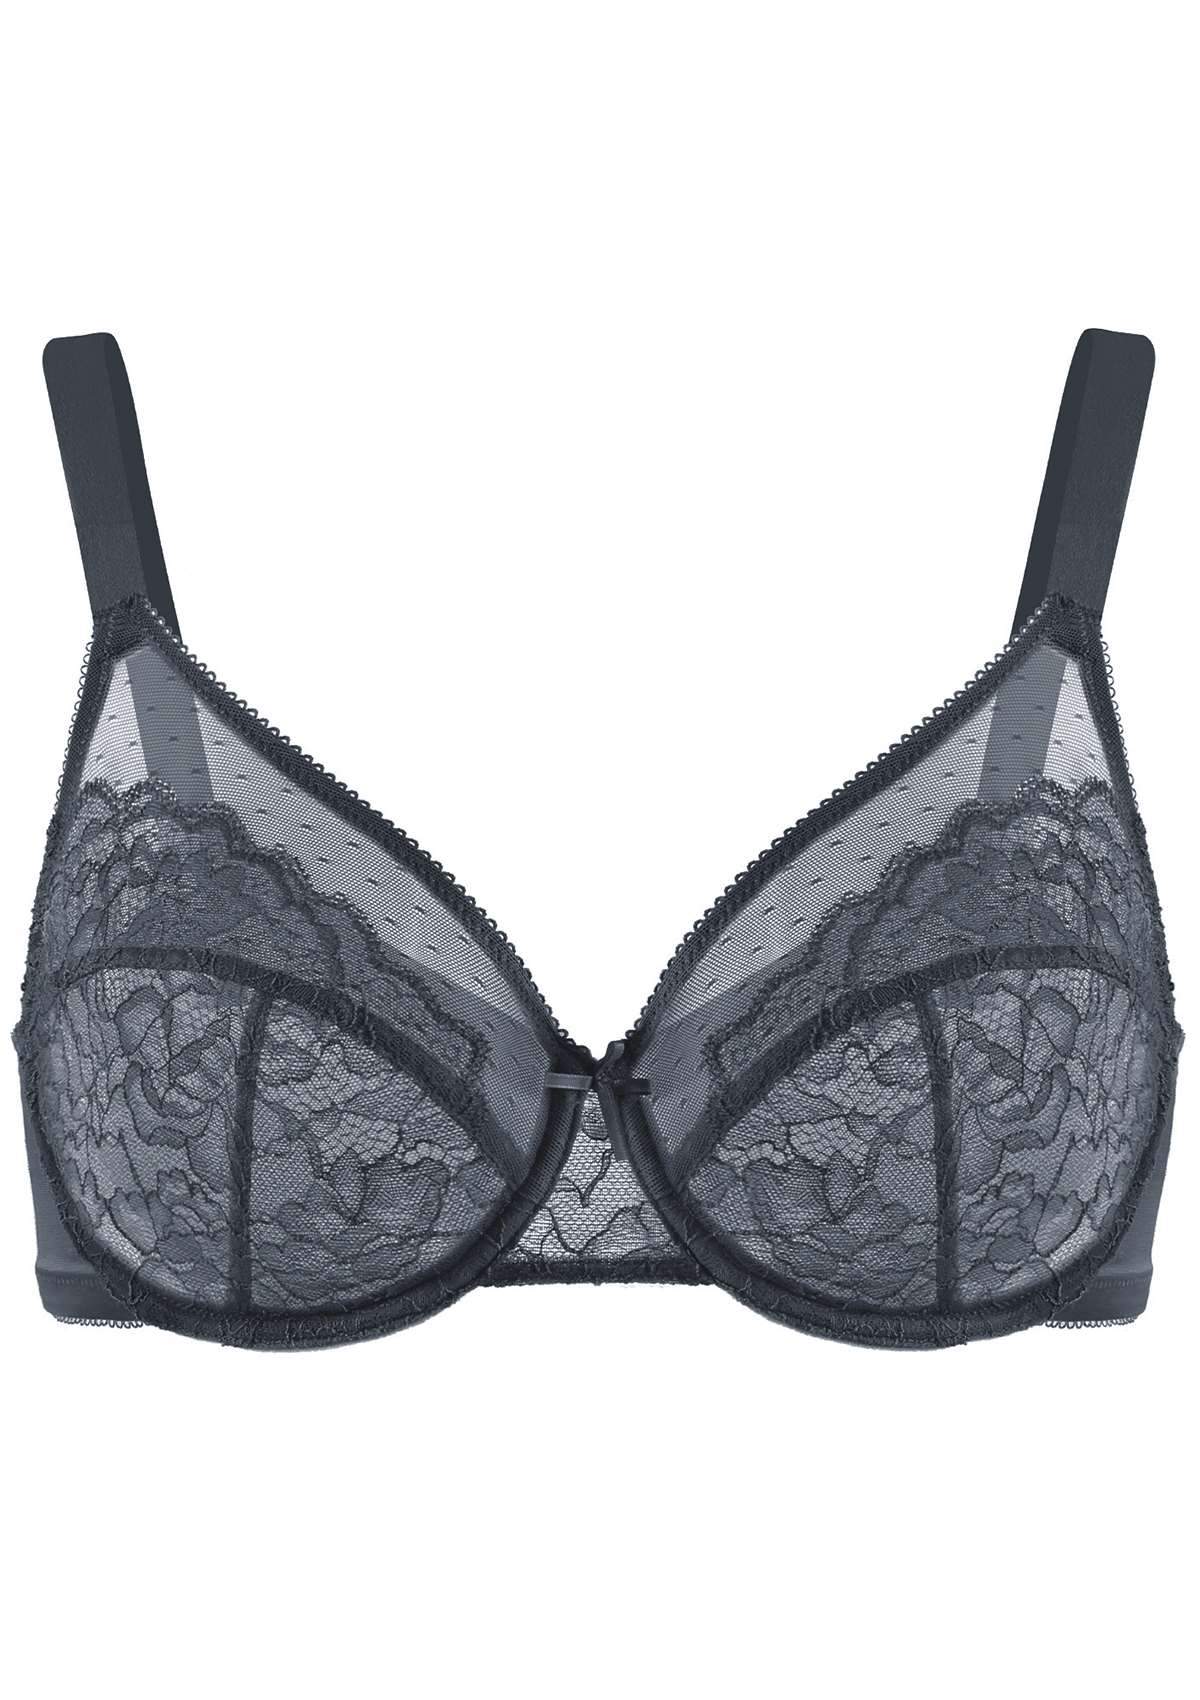 HSIA Enchante Matching Bra And Underwear Sets: Uplift Big Boobs Bra - Dark Gray / 38 / DDD/F